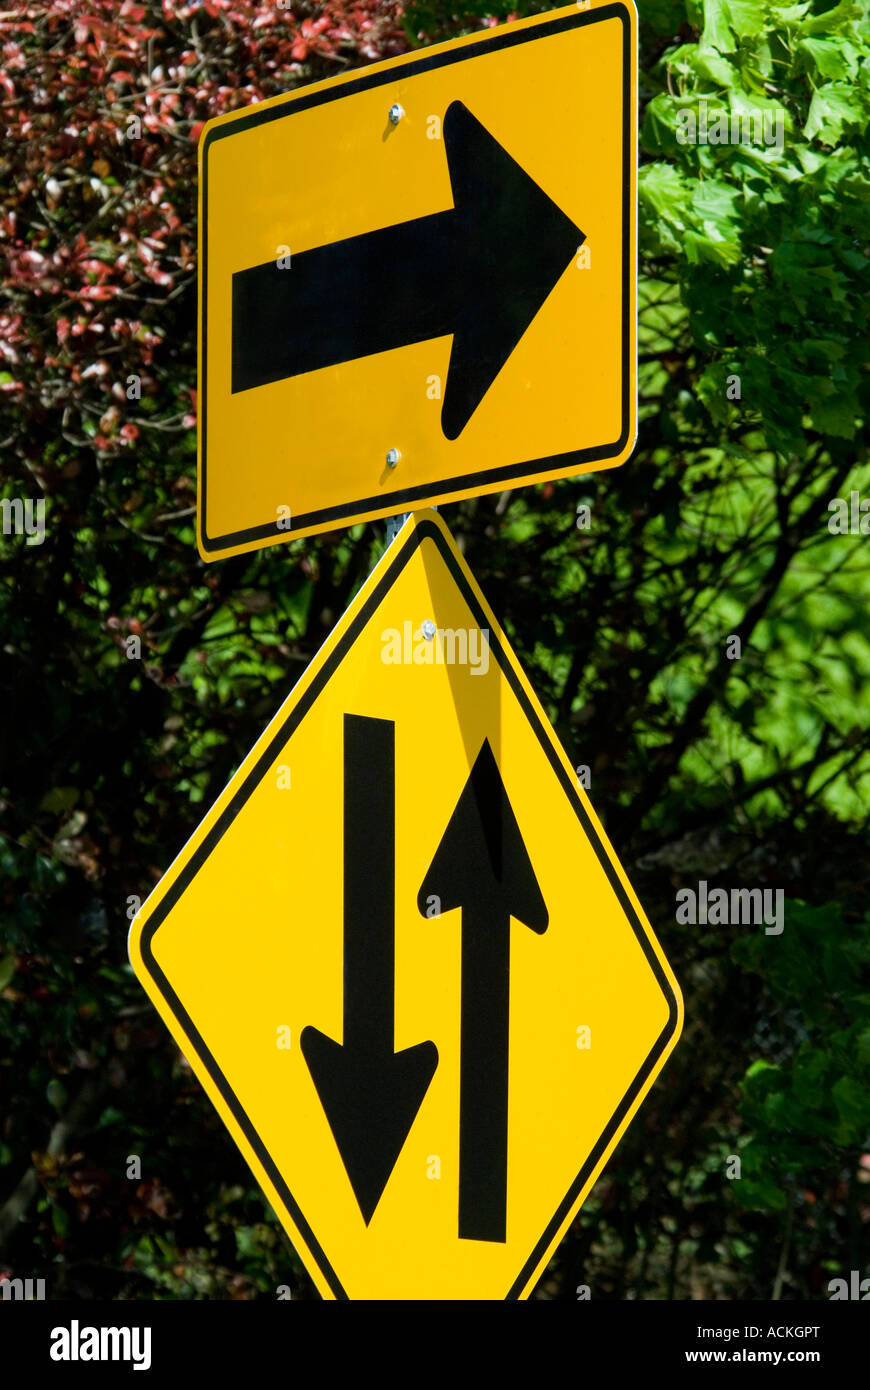 Directional traffic signs on city street Woodland Washington Stock Photo